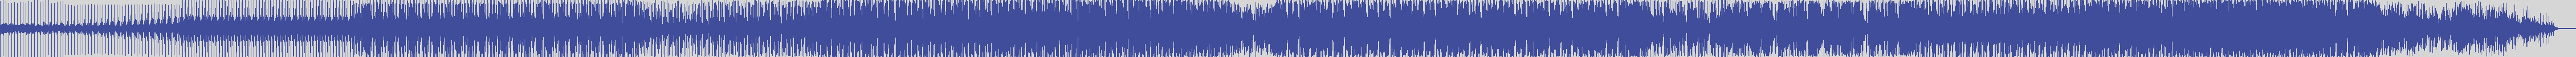 vitti_records [VIT012] Karuna - Giza [Original Mix] audio wave form